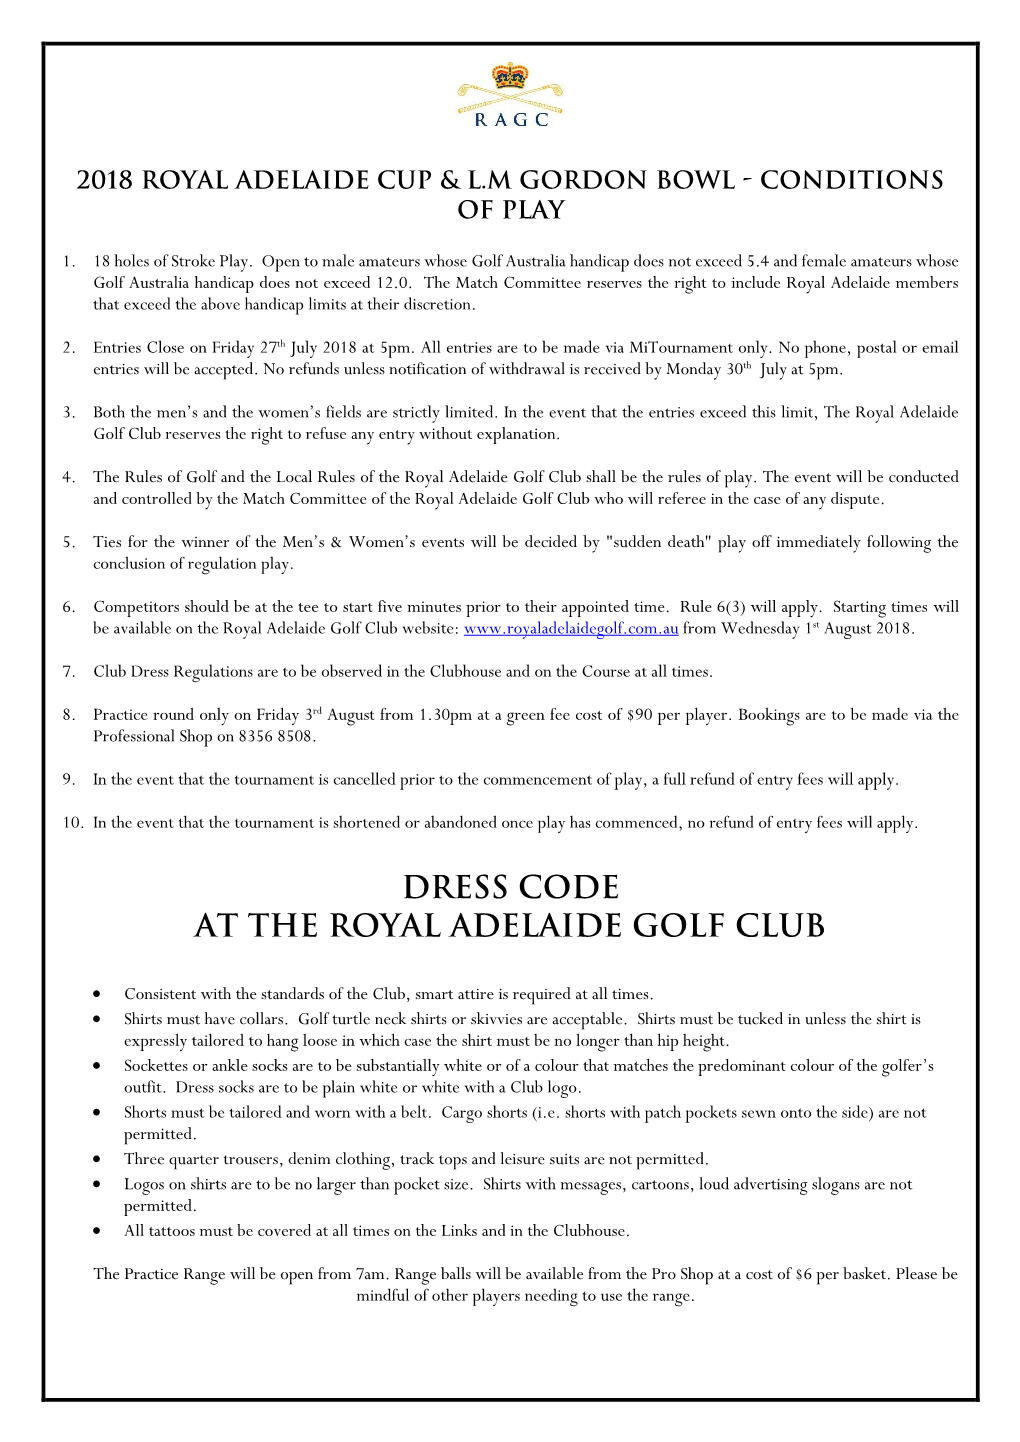 DRESS CODE at the Royal Adelaide Golf Club